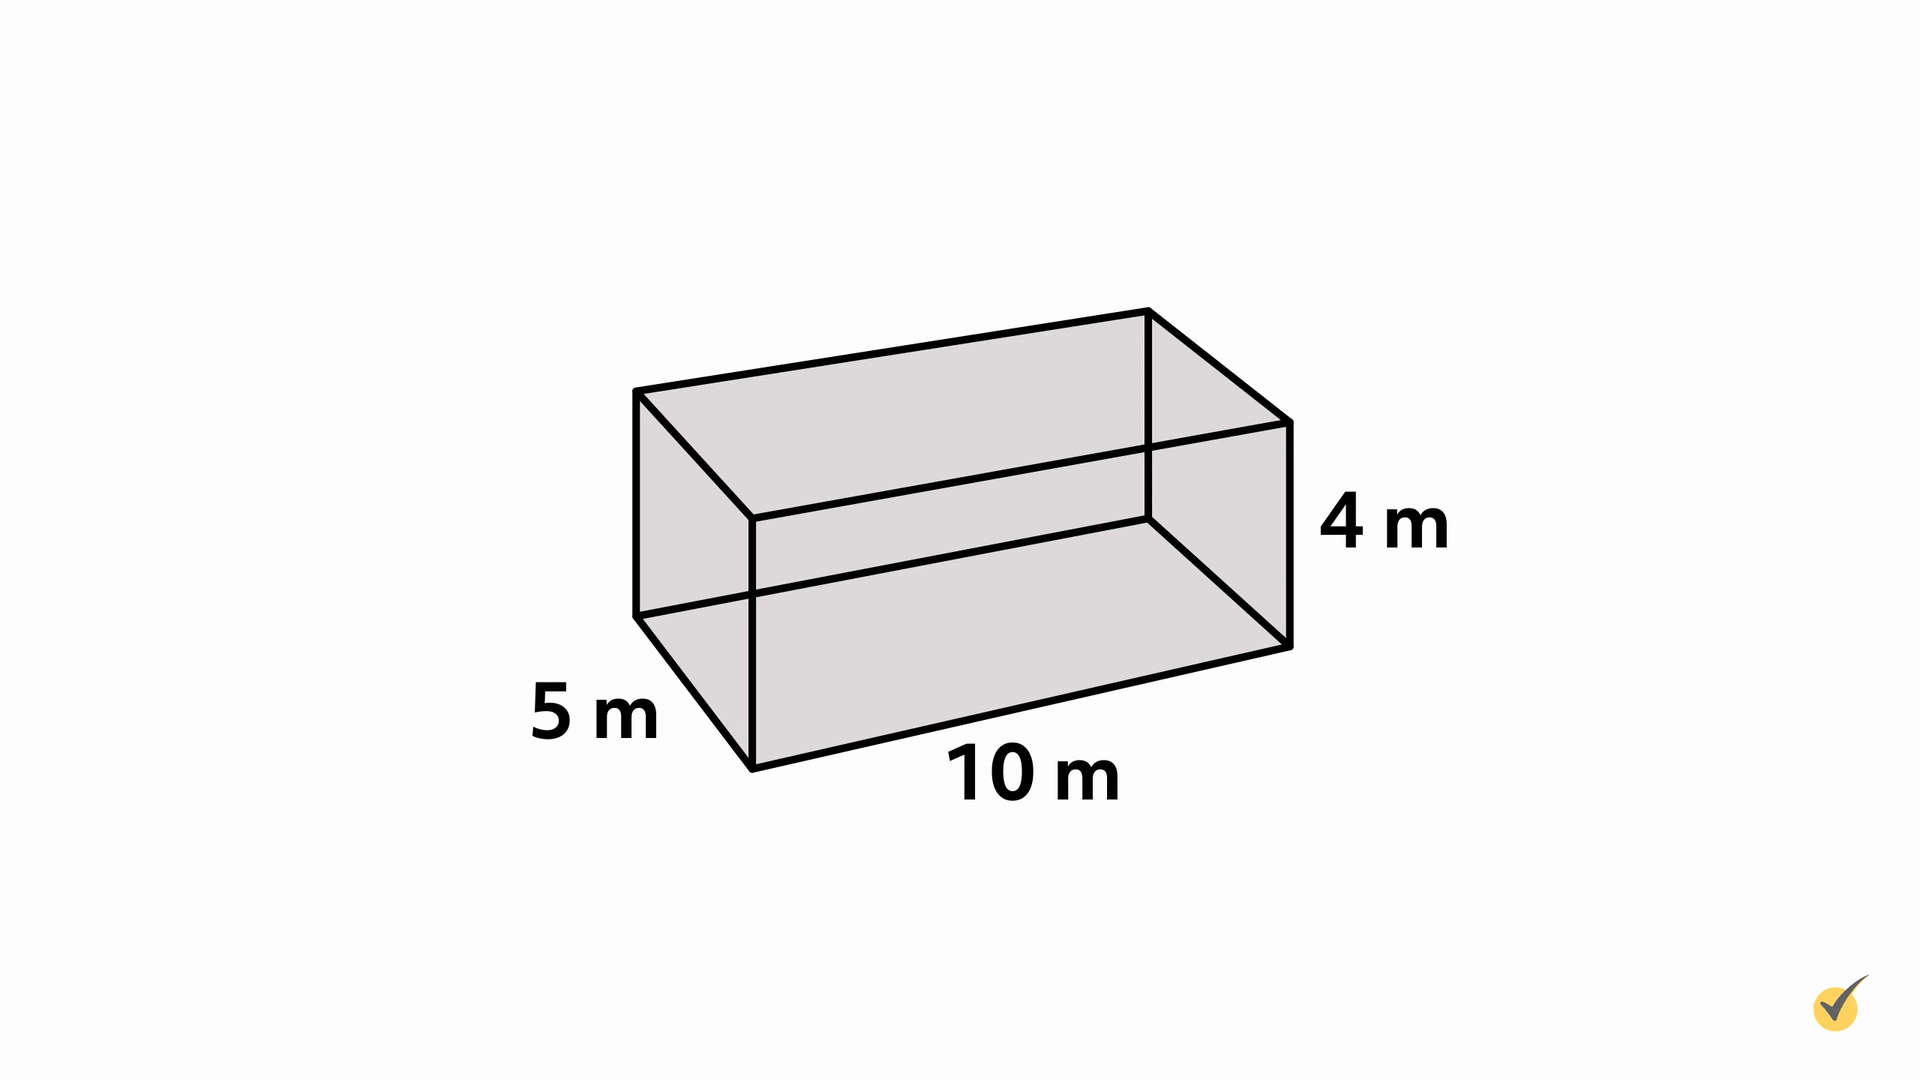 Pic of rectangular prism